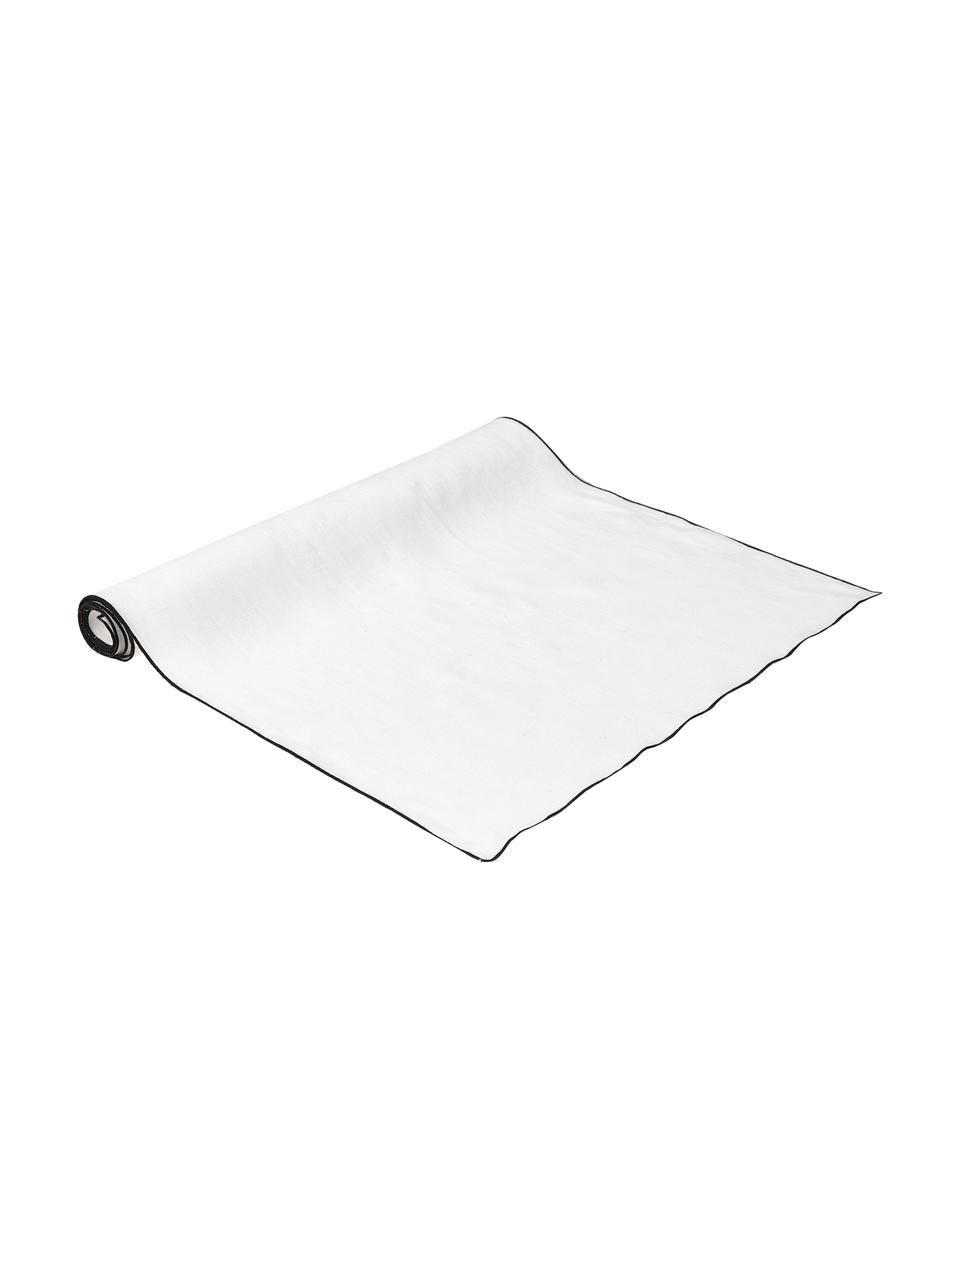 Chemin de table en lin blanc avec passepoil Vilnia, 100 % pur lin, Blanc, noir, larg. 50 x long. 150 cm